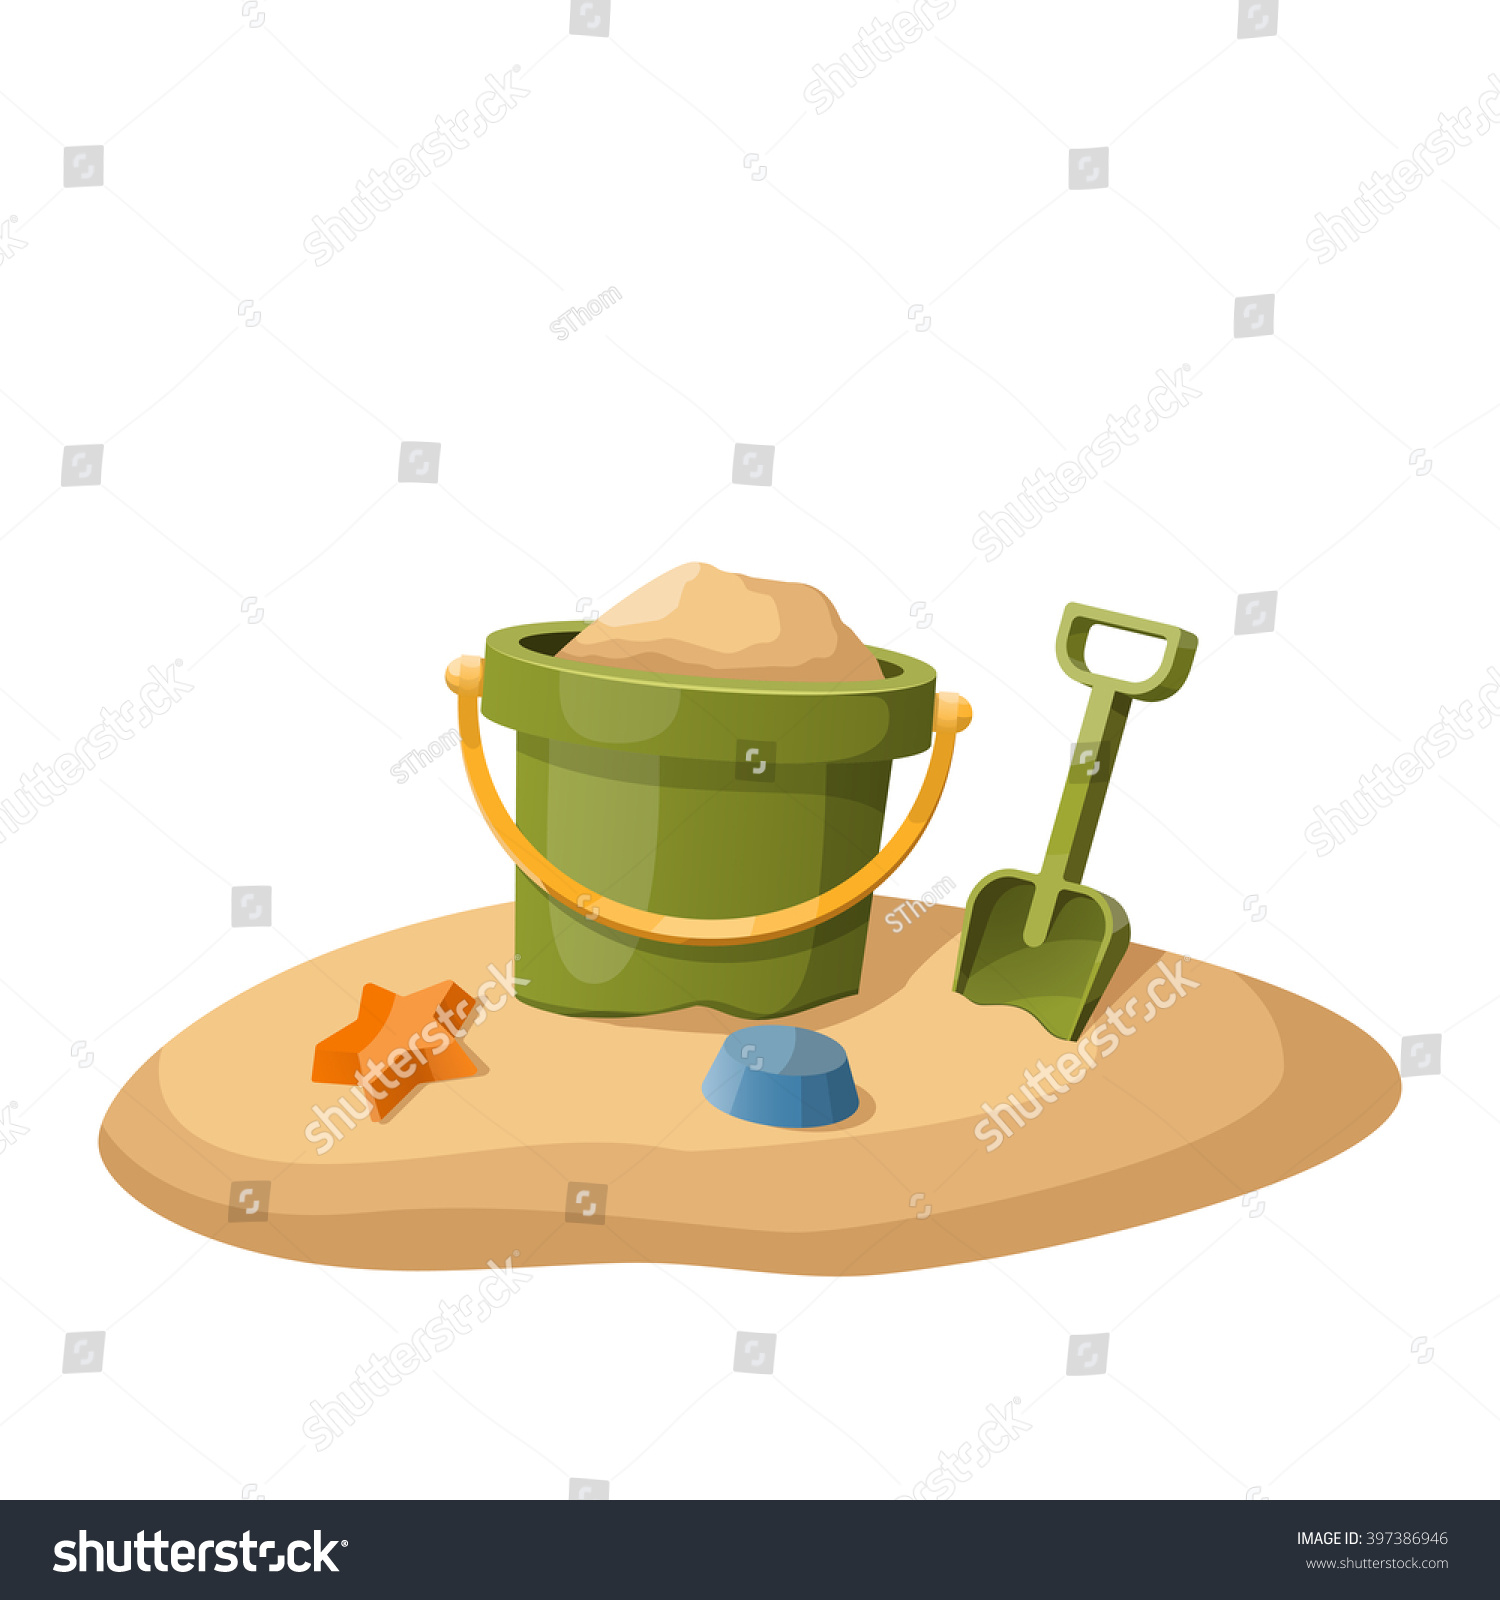 Toy Bucket Shovel Sand Isolated On Stock Photo (Photo, Vector ...